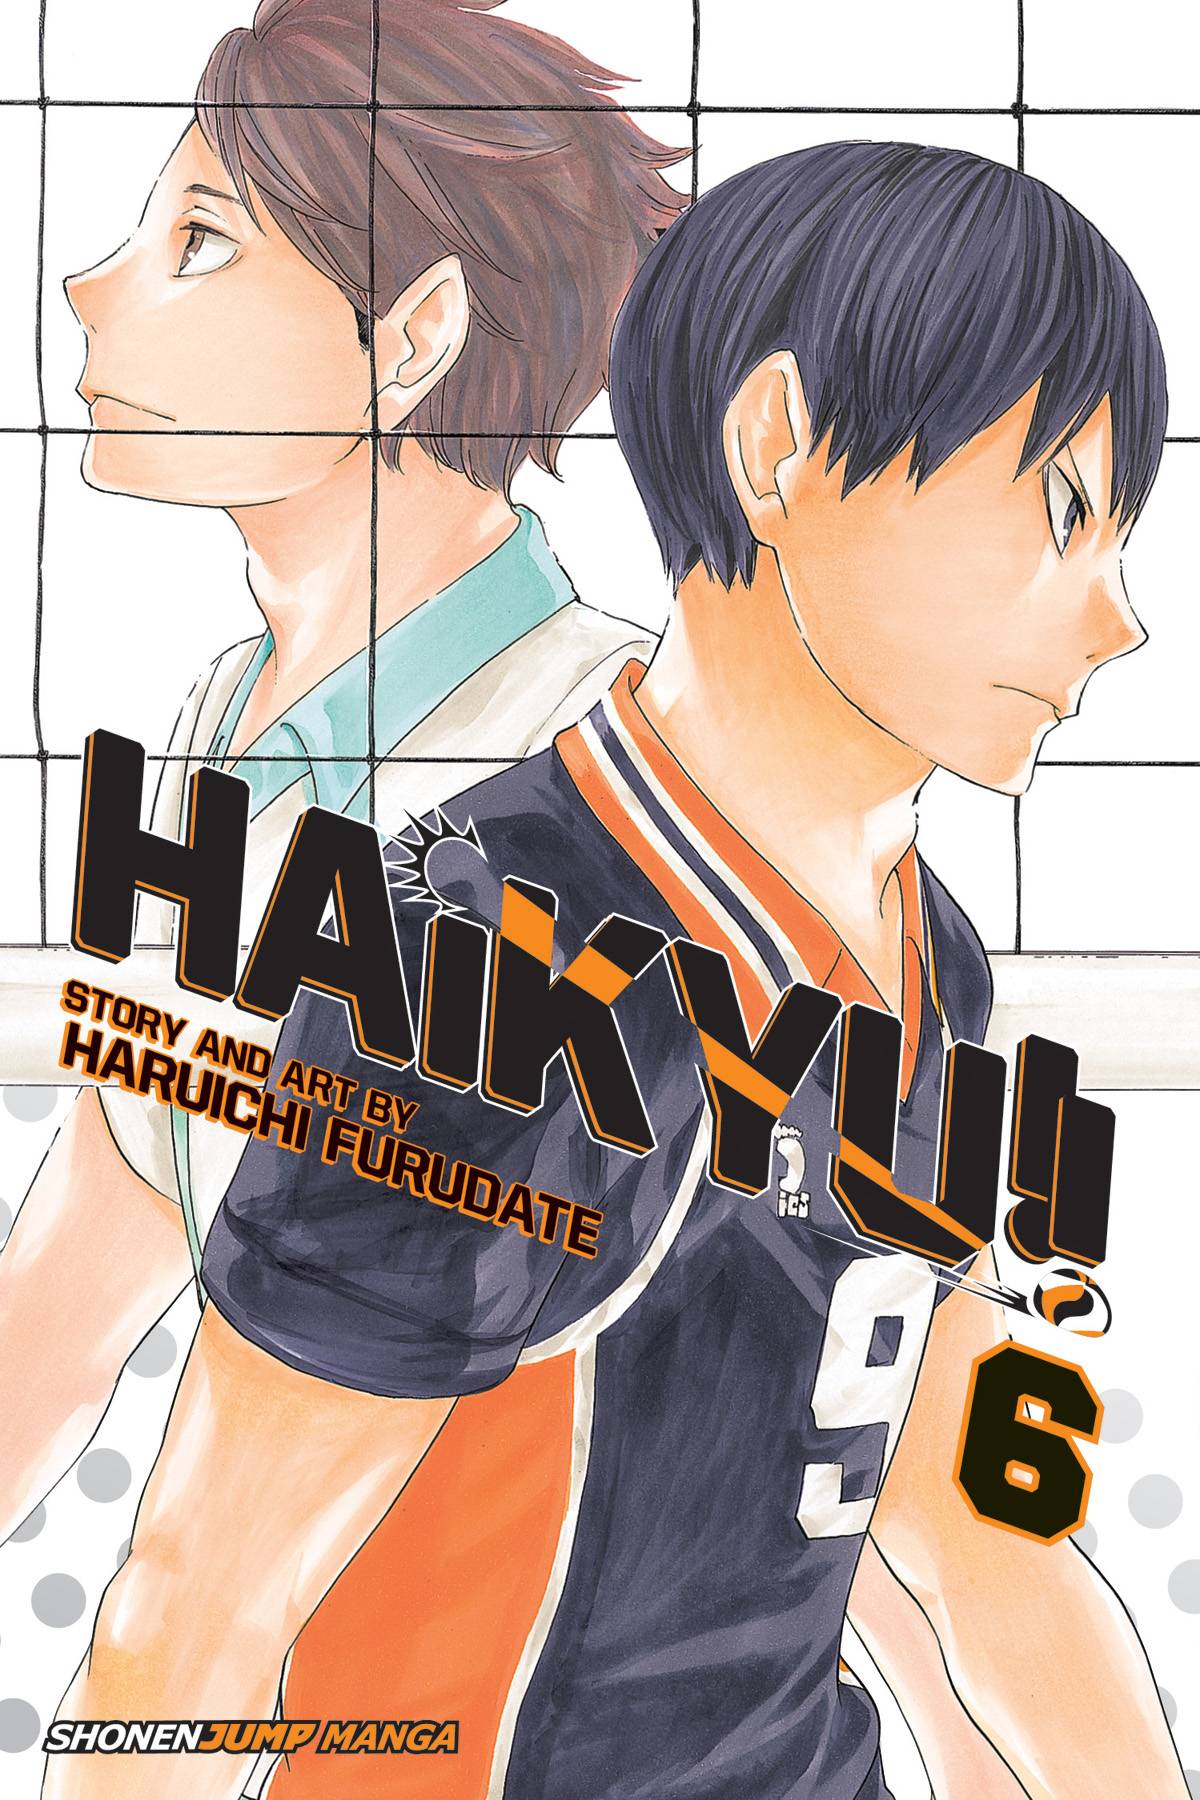 Haikyu Manga Volume 6